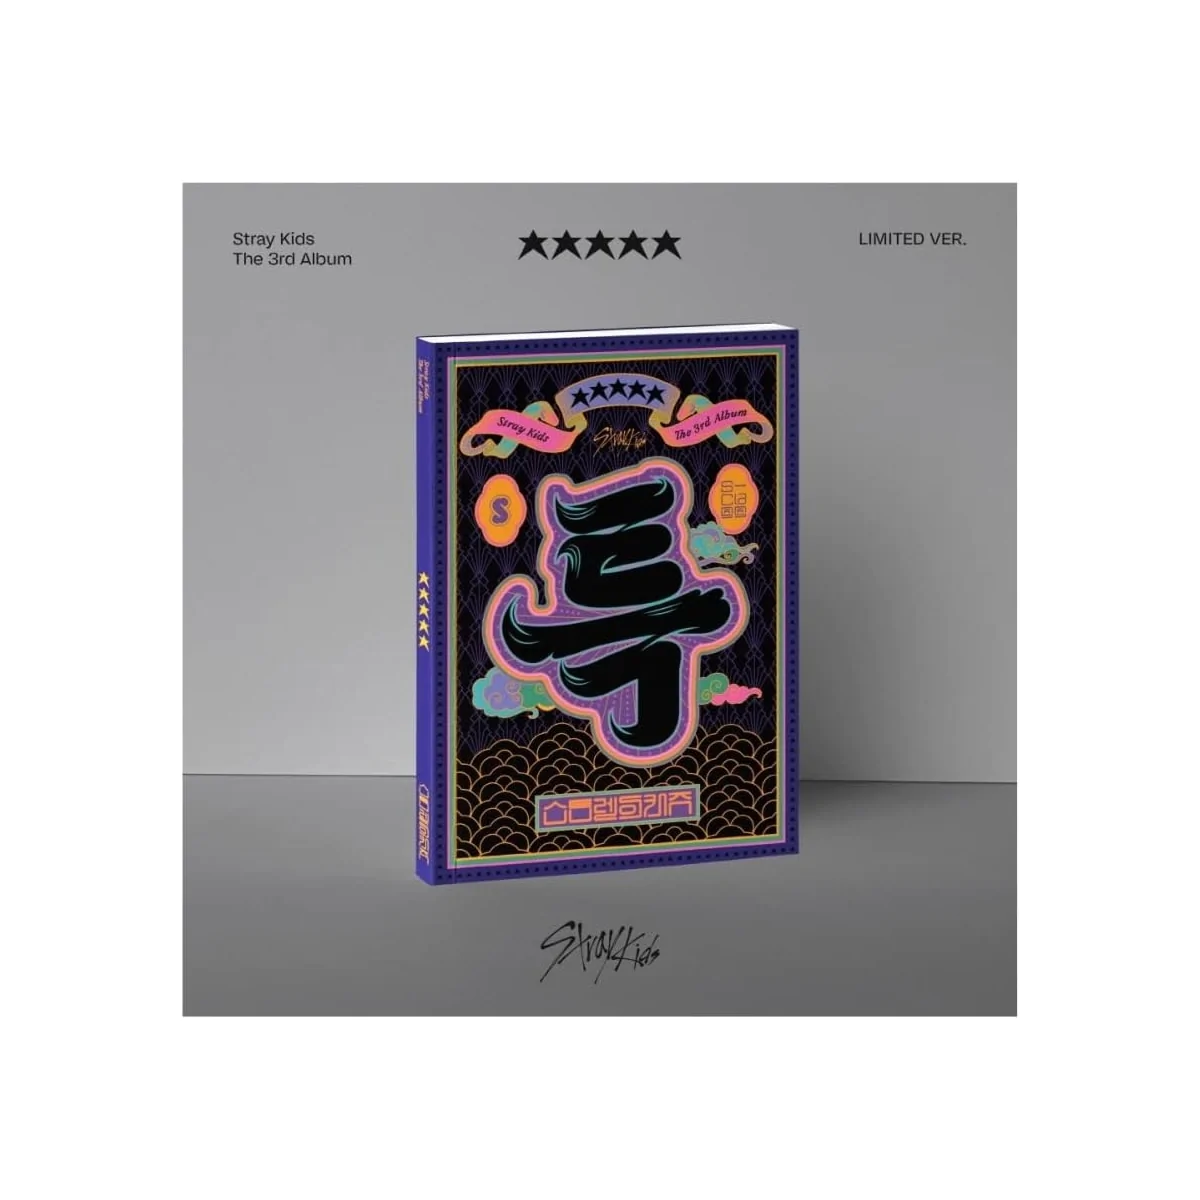 Stray Kids - ★★★★★ (5-STAR) (LIMITED VERSION) (3rd Album) 